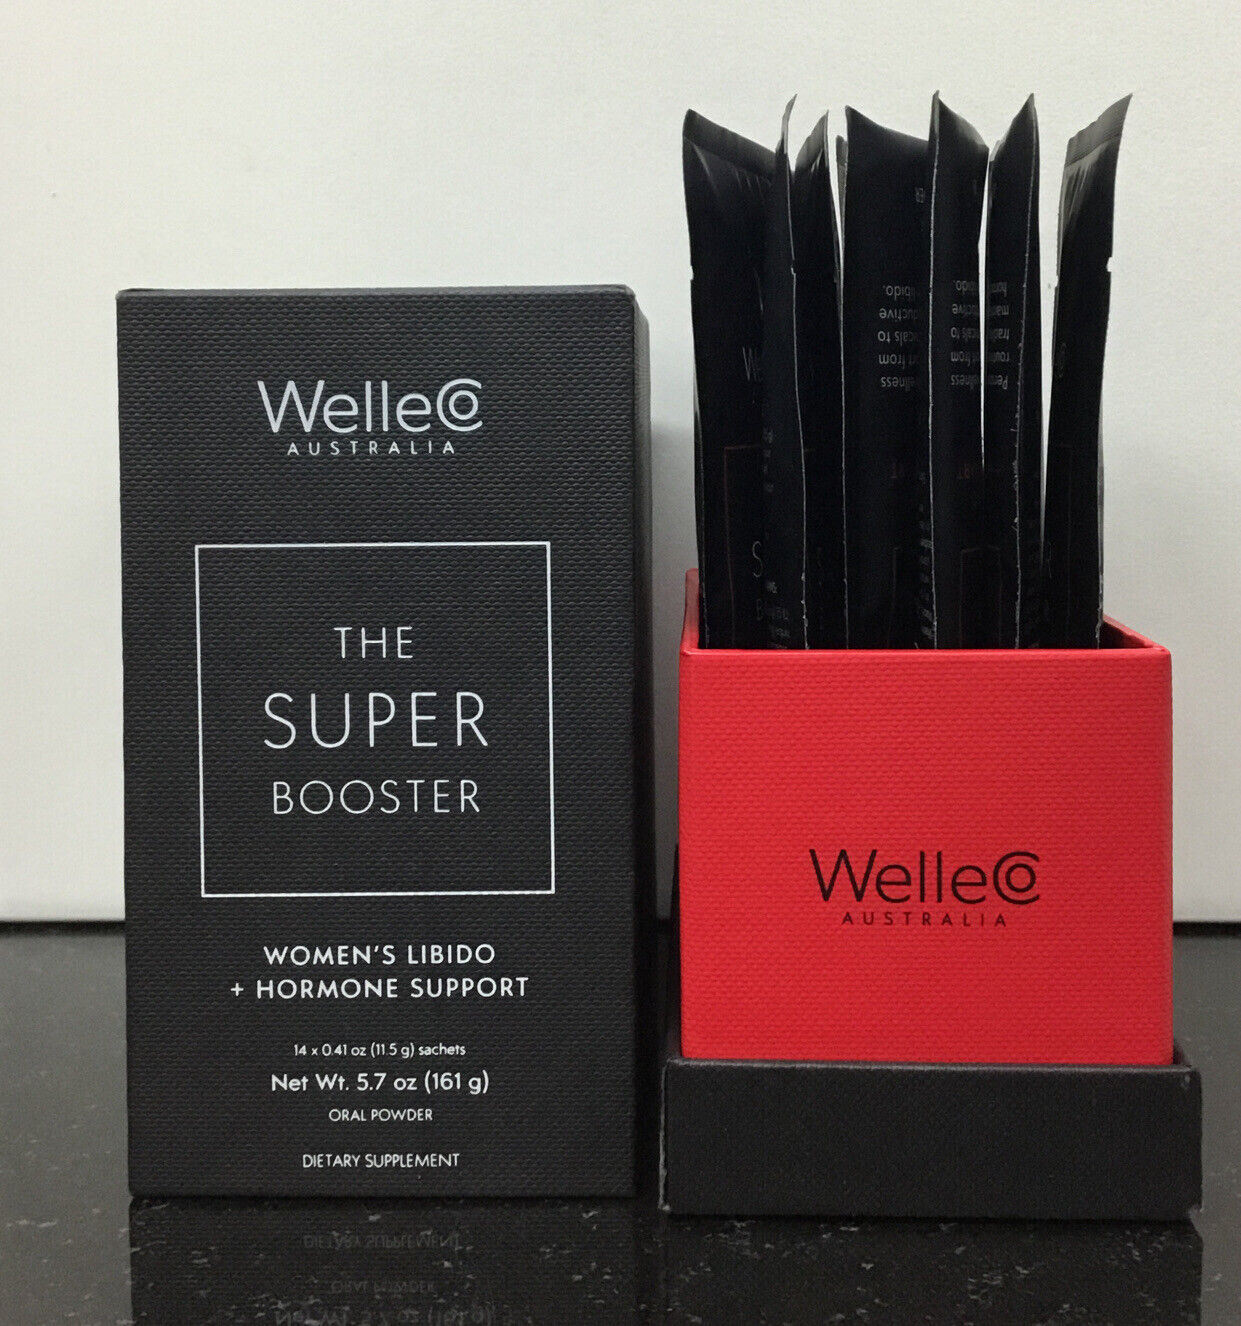 WELLCO SUPER BOOSTER Women's Libido + Hormone Support 14X0.41 OZ